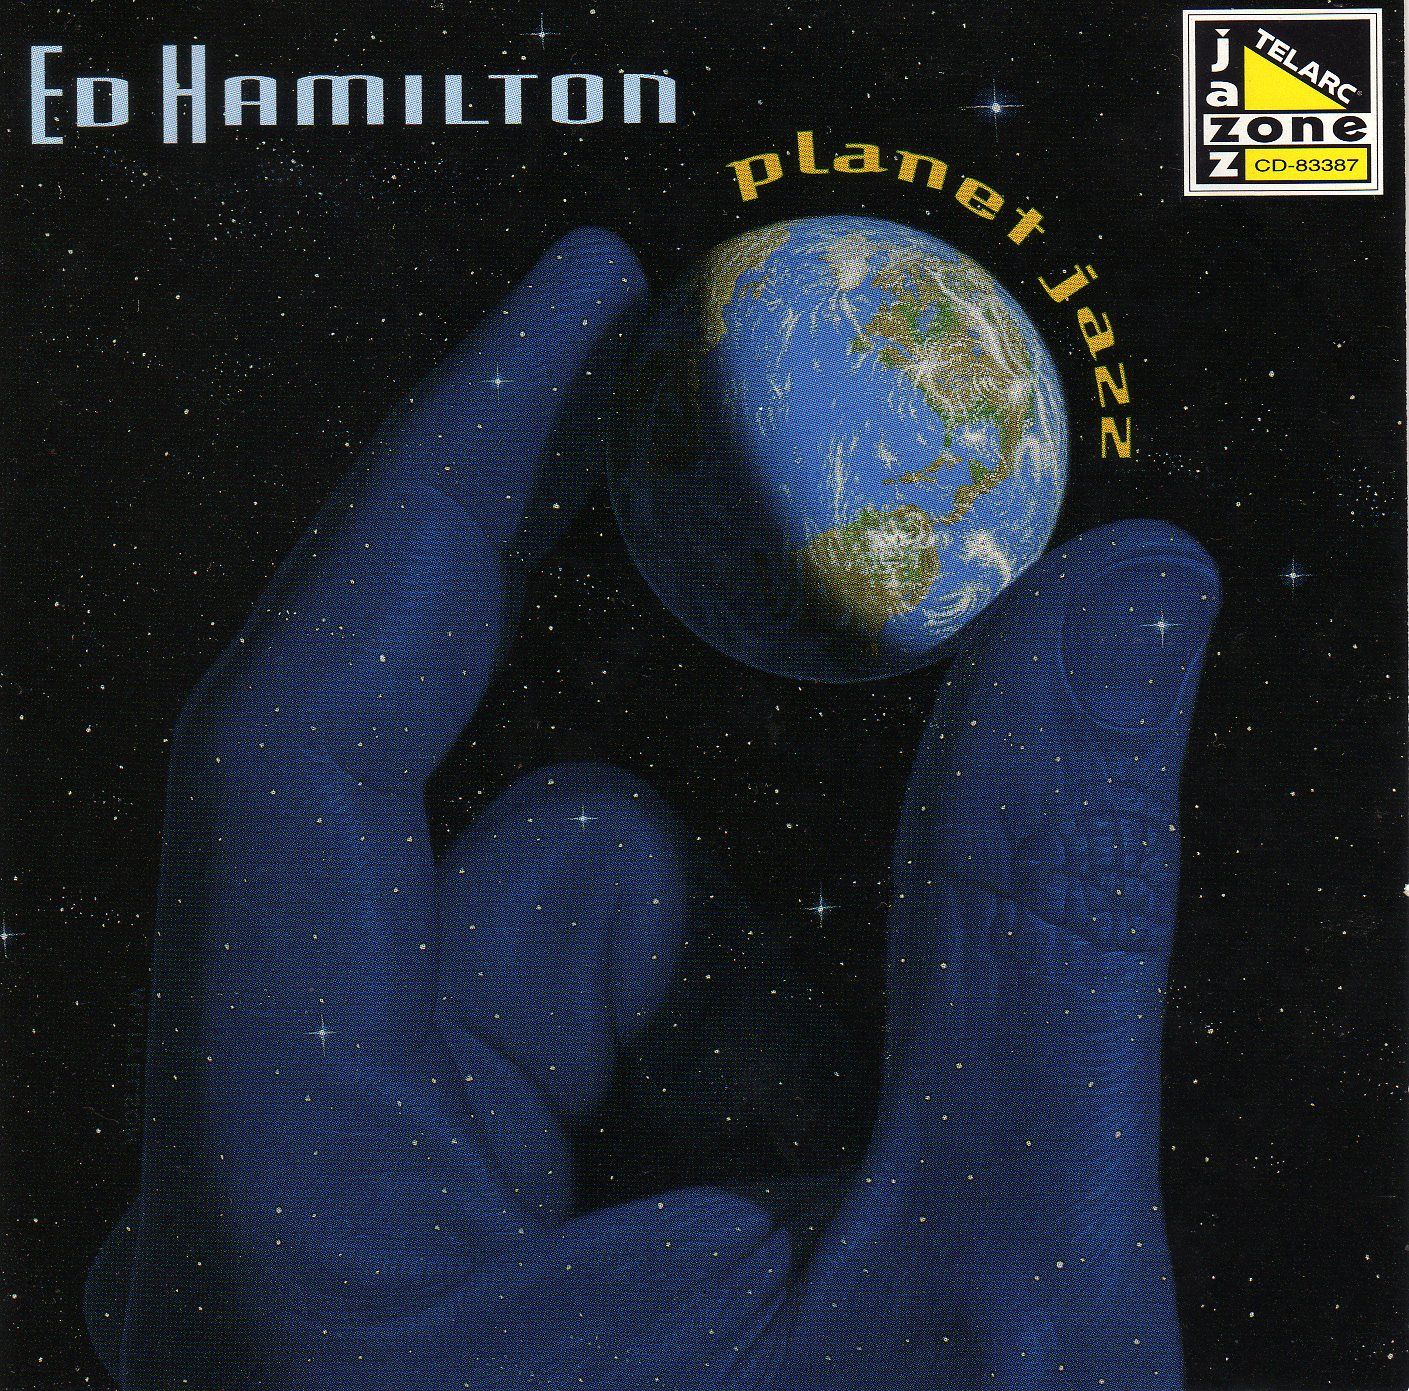 For You Lot Ed Hamilton - 1996 Planet Jazz.